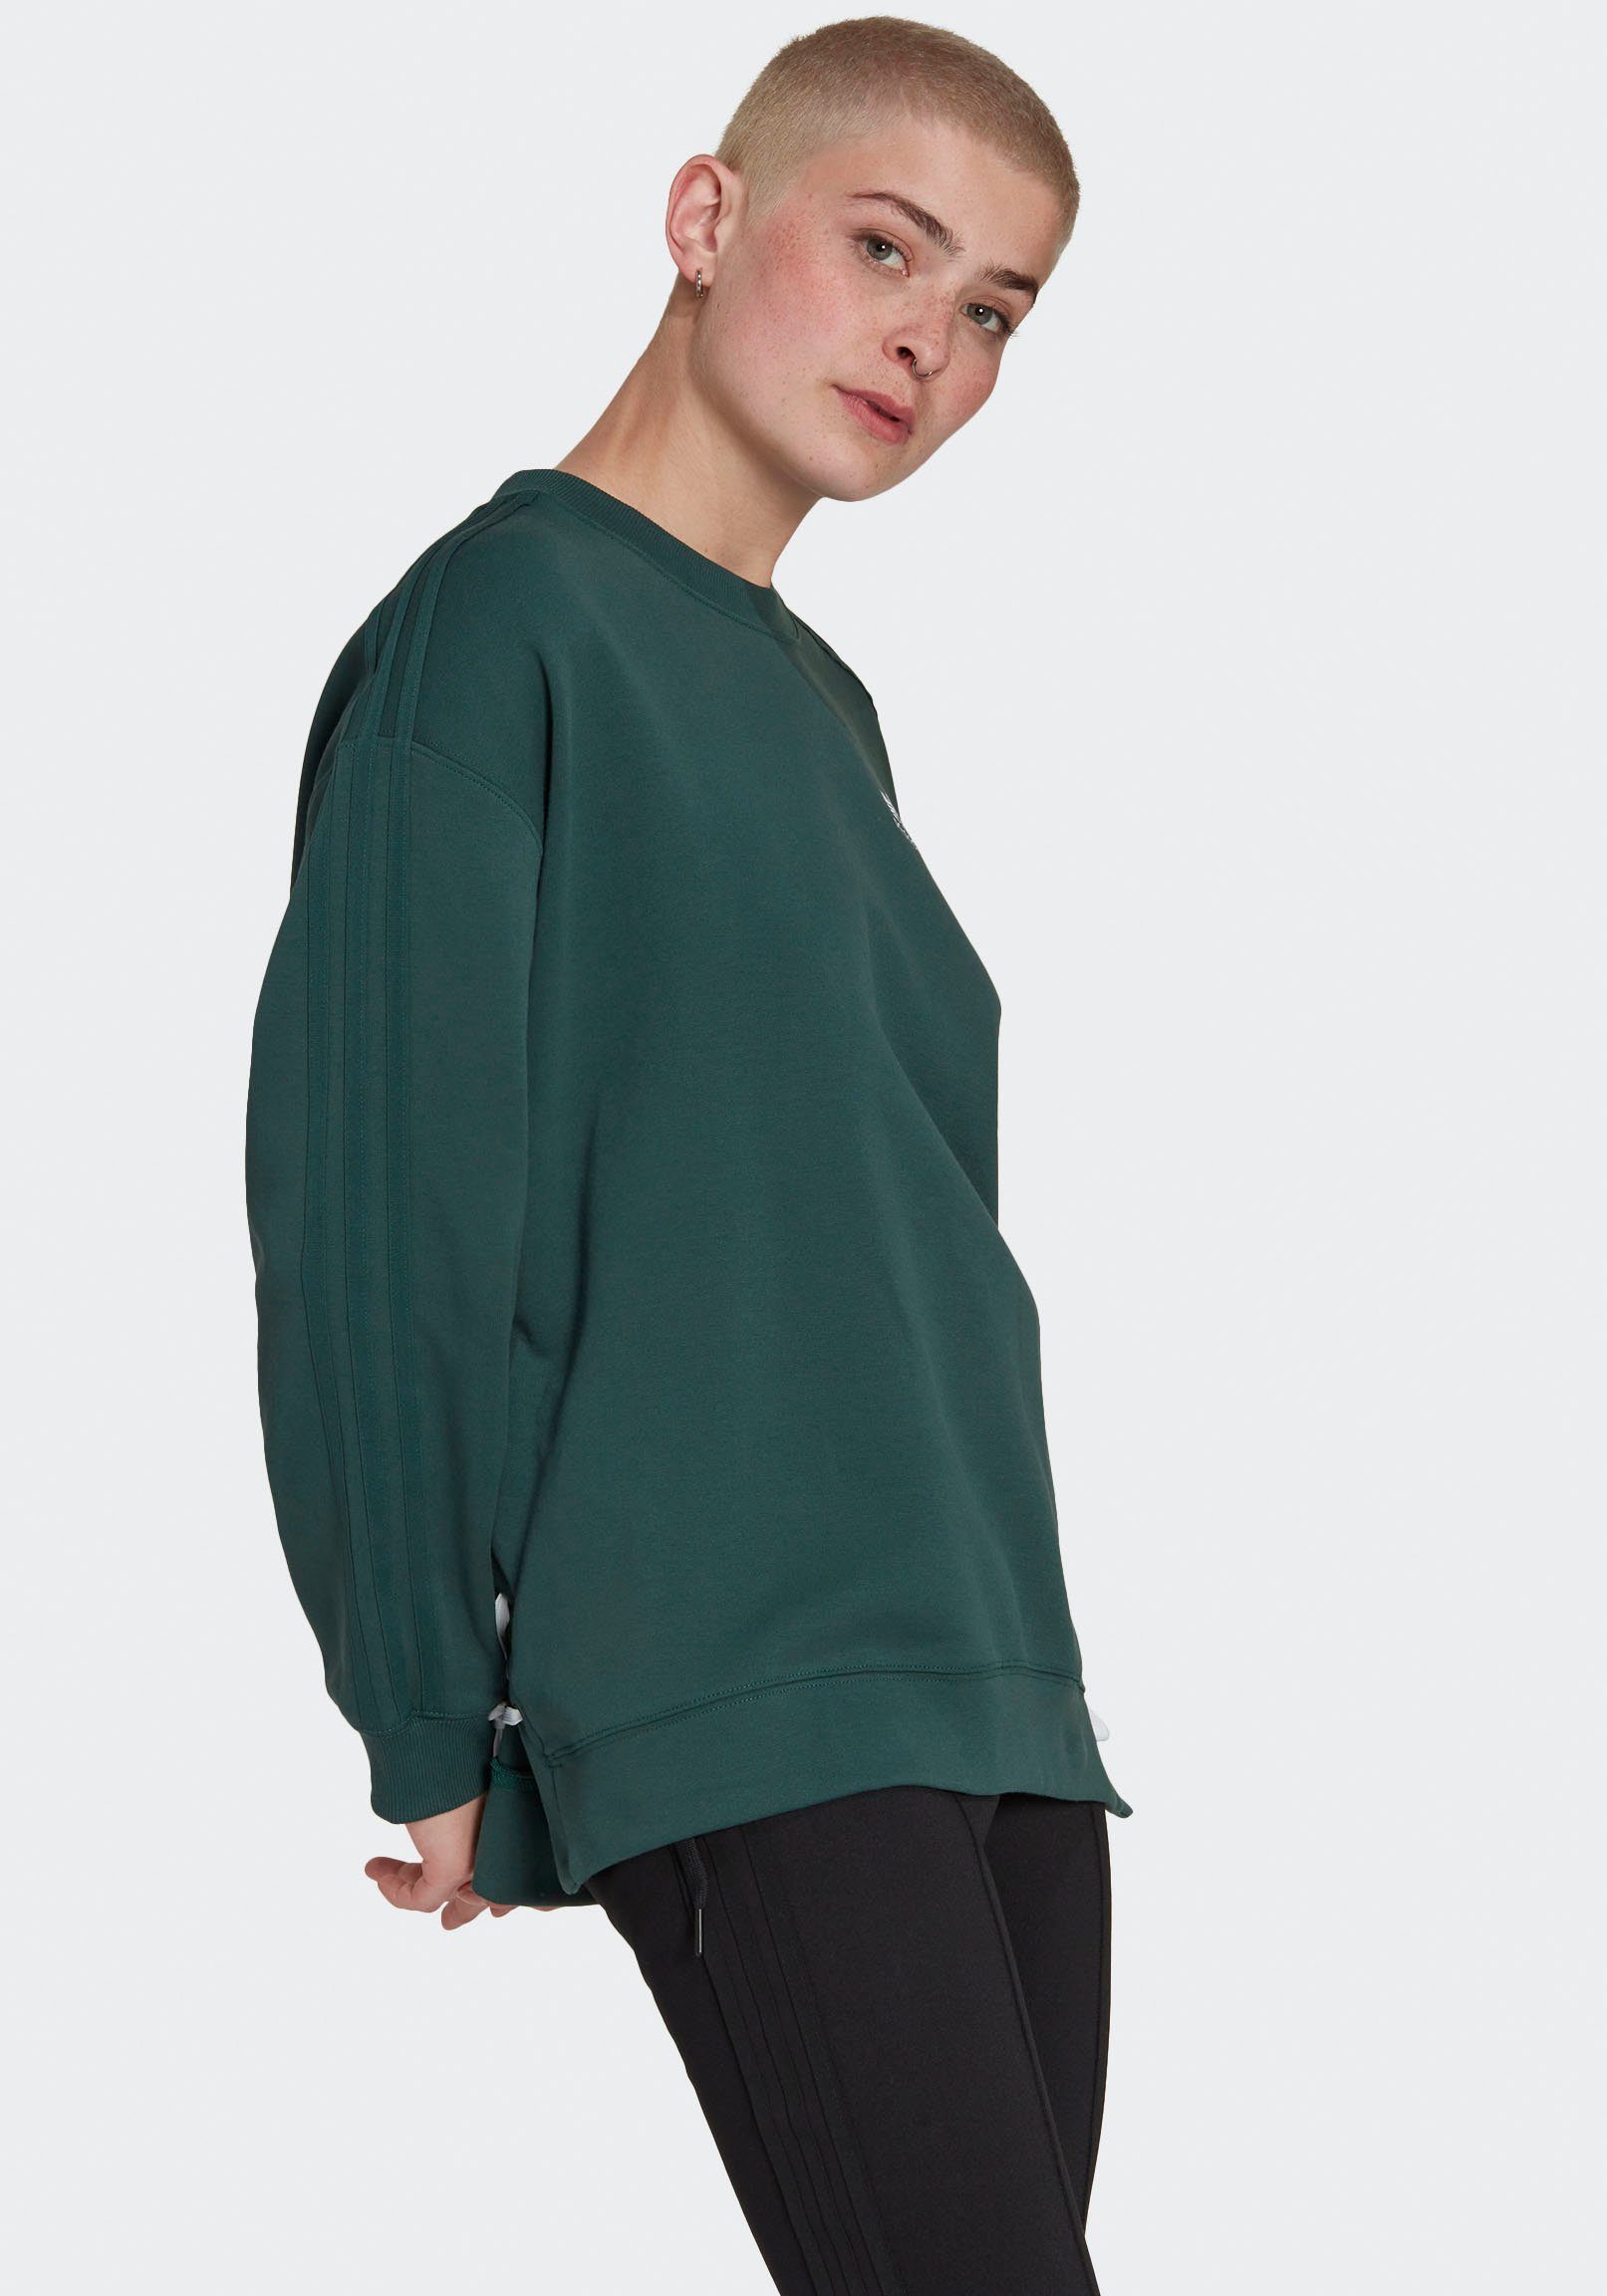 Originals Sweatshirt LACED MINGRE ORIGINAL adidas ALWAYS